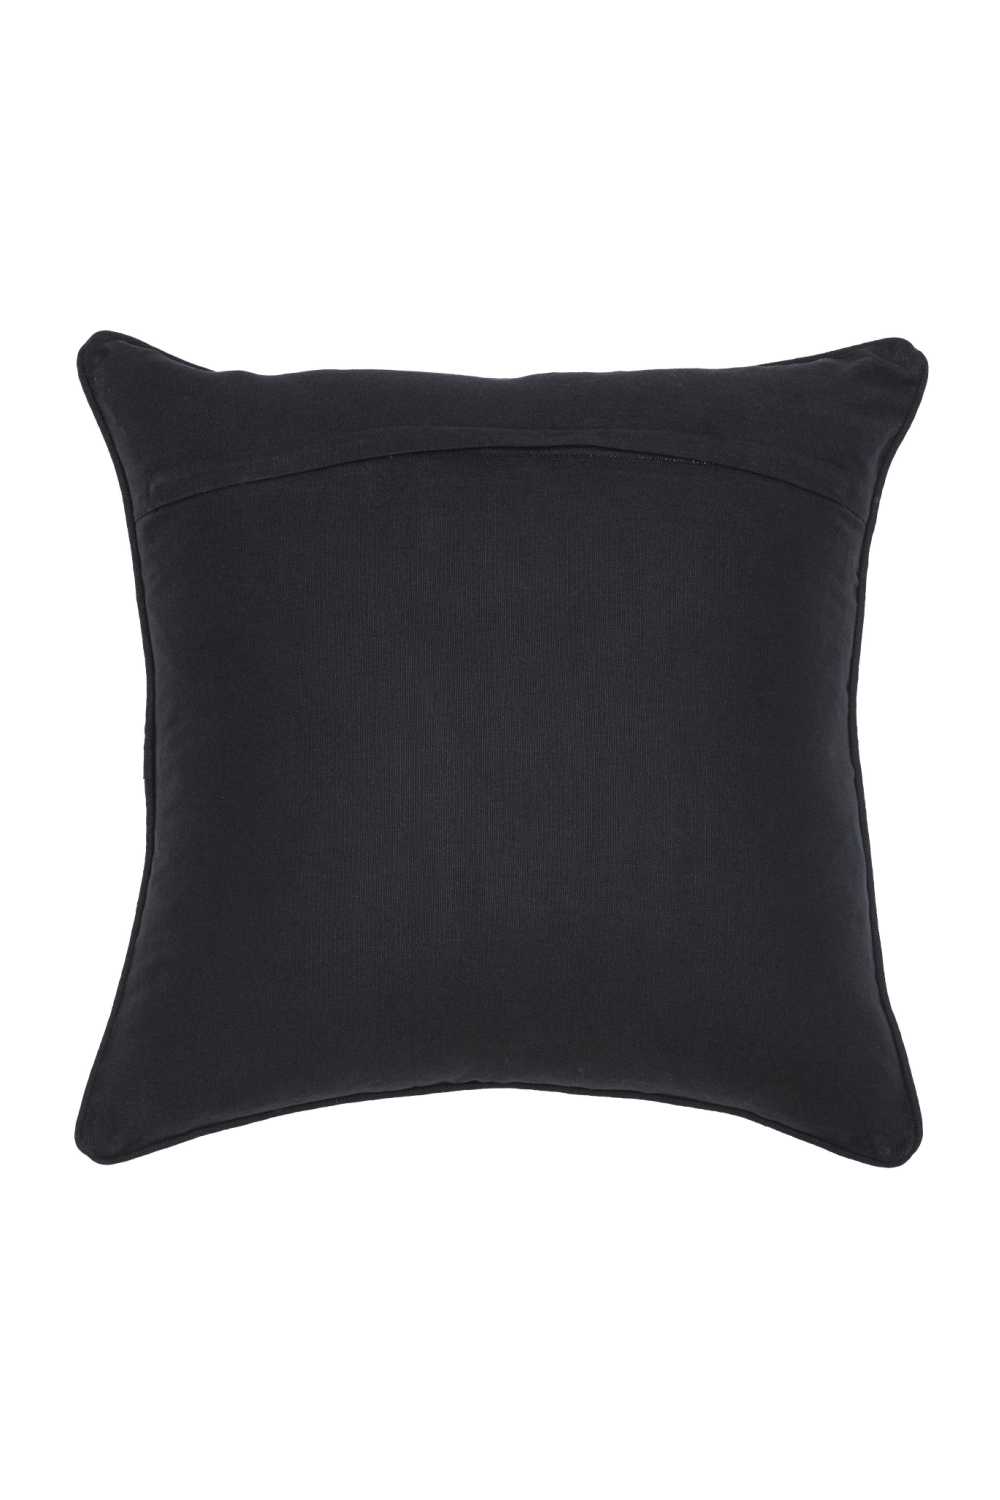 Geometric Pattern Pillow | Eichholtz Spray | Oroa.com